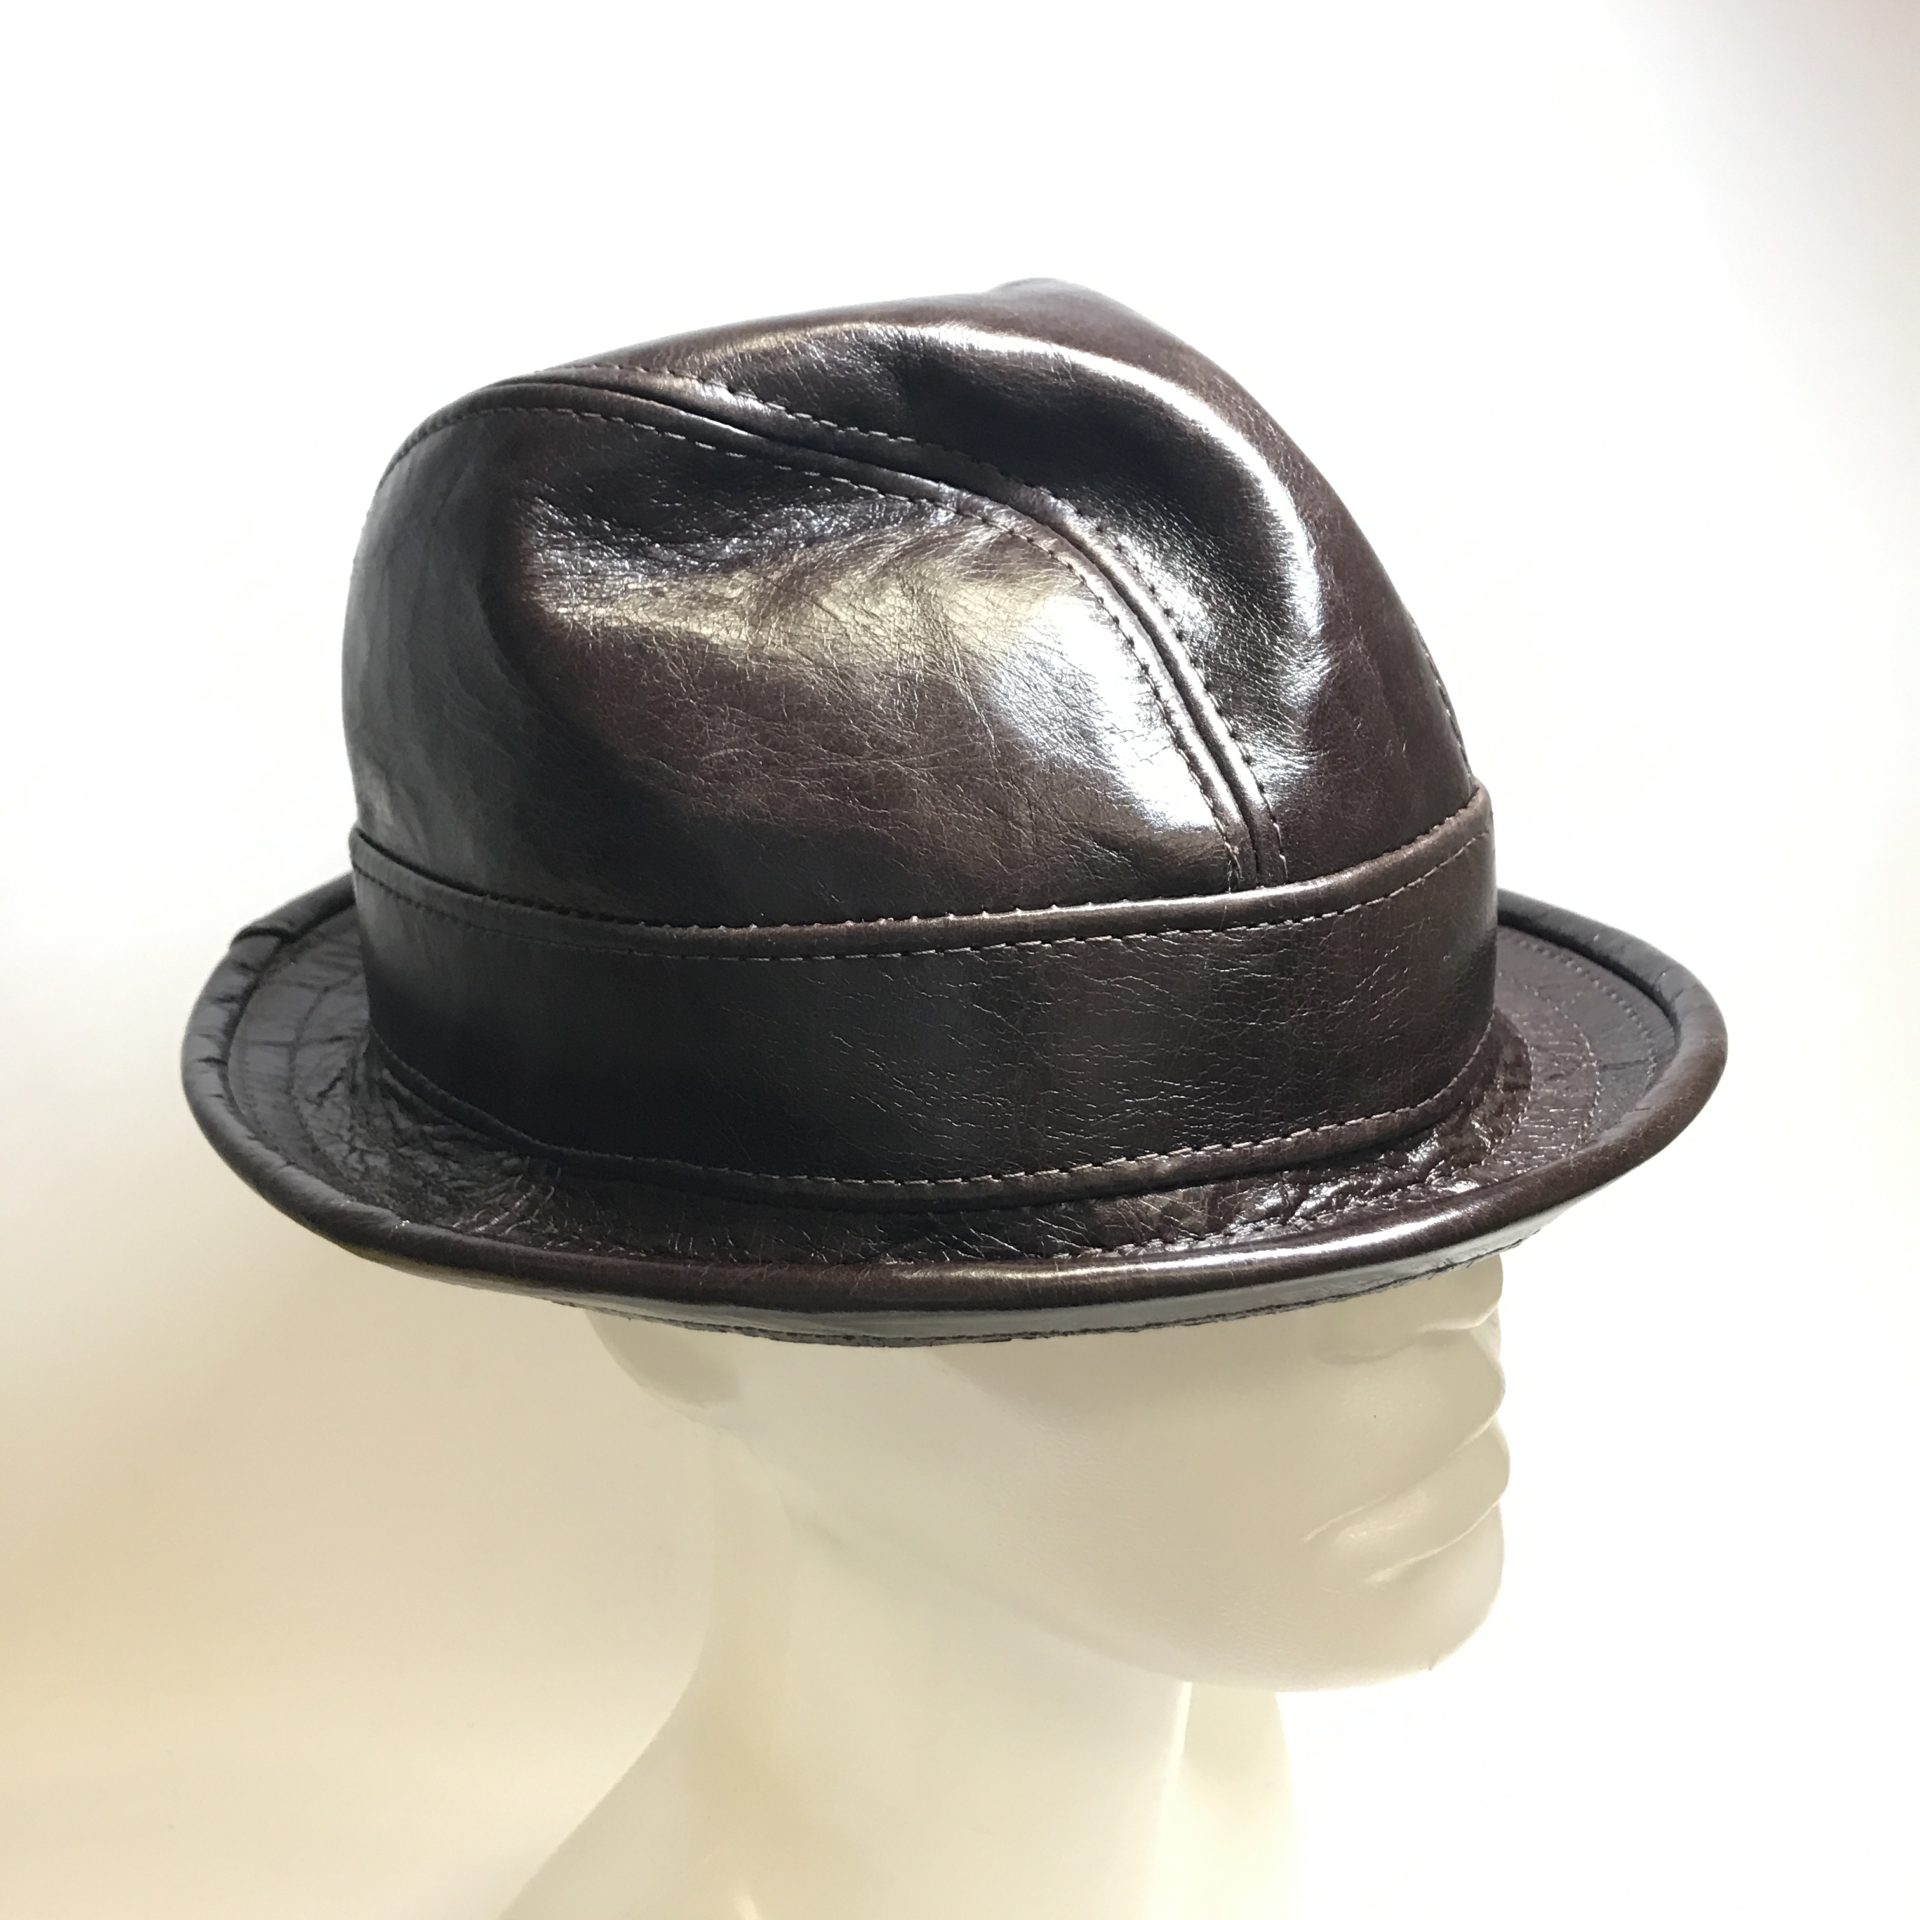 Jill Corbett Fedora Snatch hat cracked brown leather Handmade S/M/L/XL/XXL/XXXL